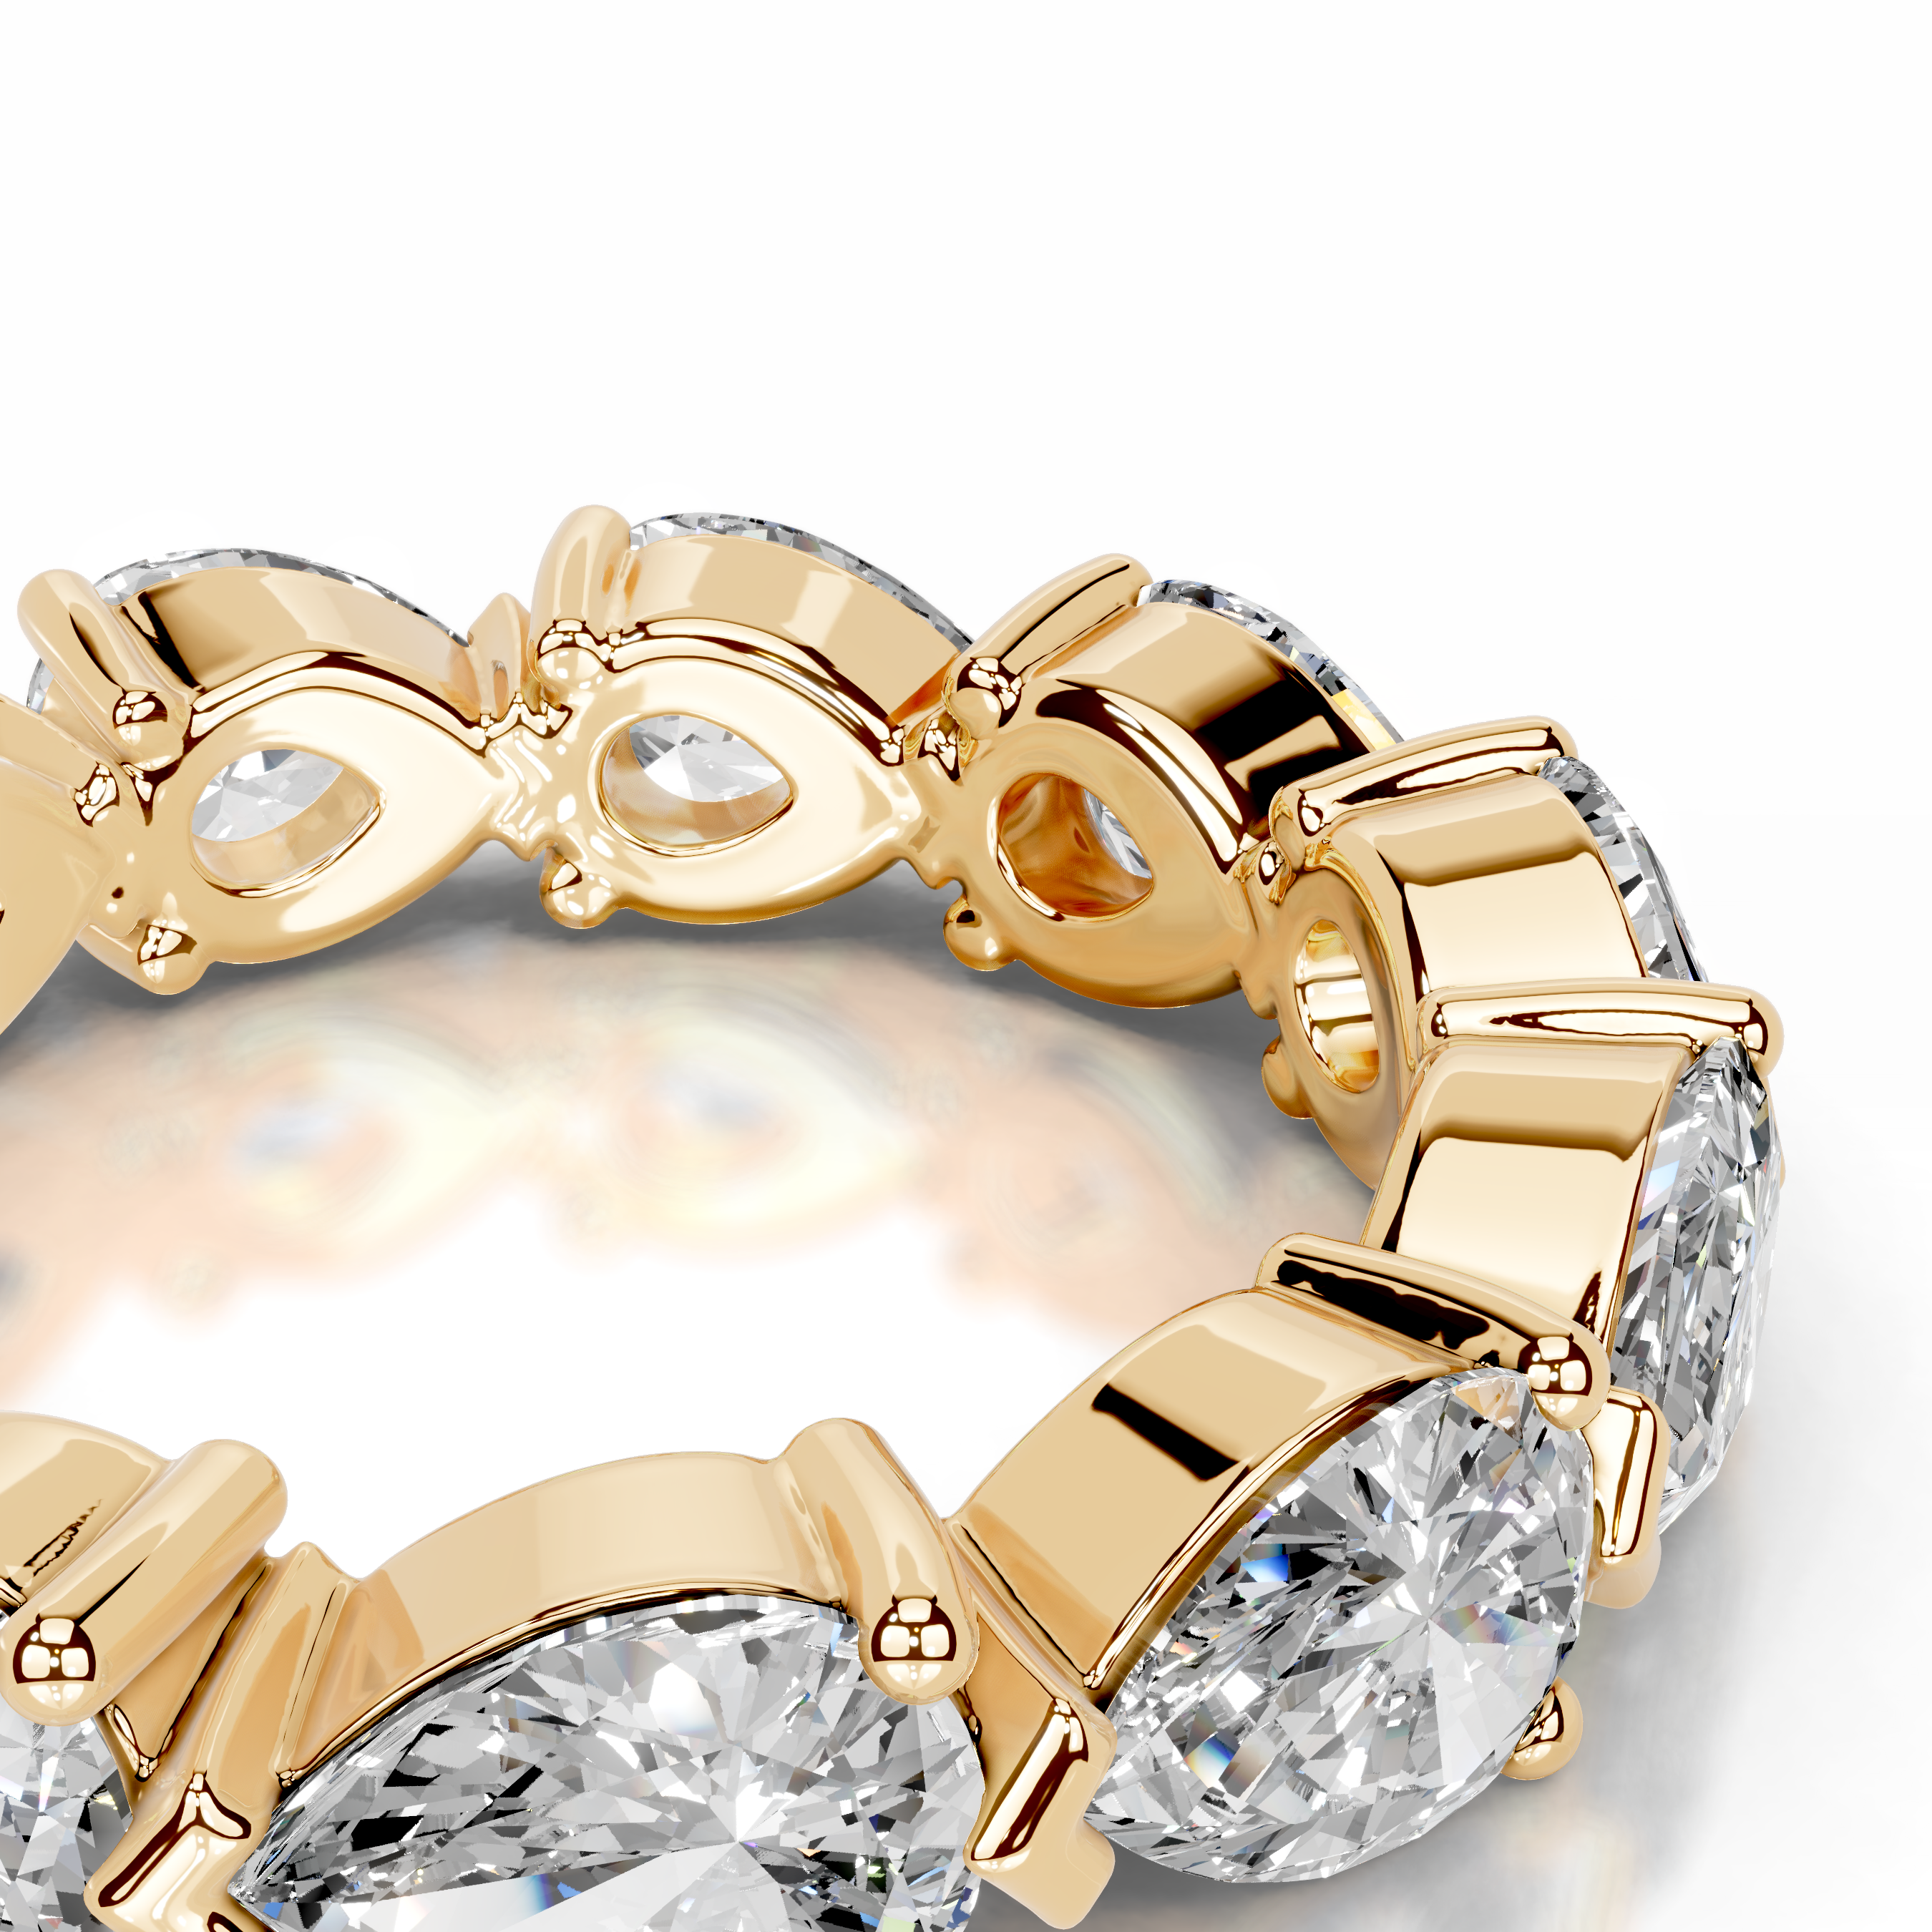 Tyrell Diamond Wedding Ring   (4.50 Carat) -18K Yellow Gold